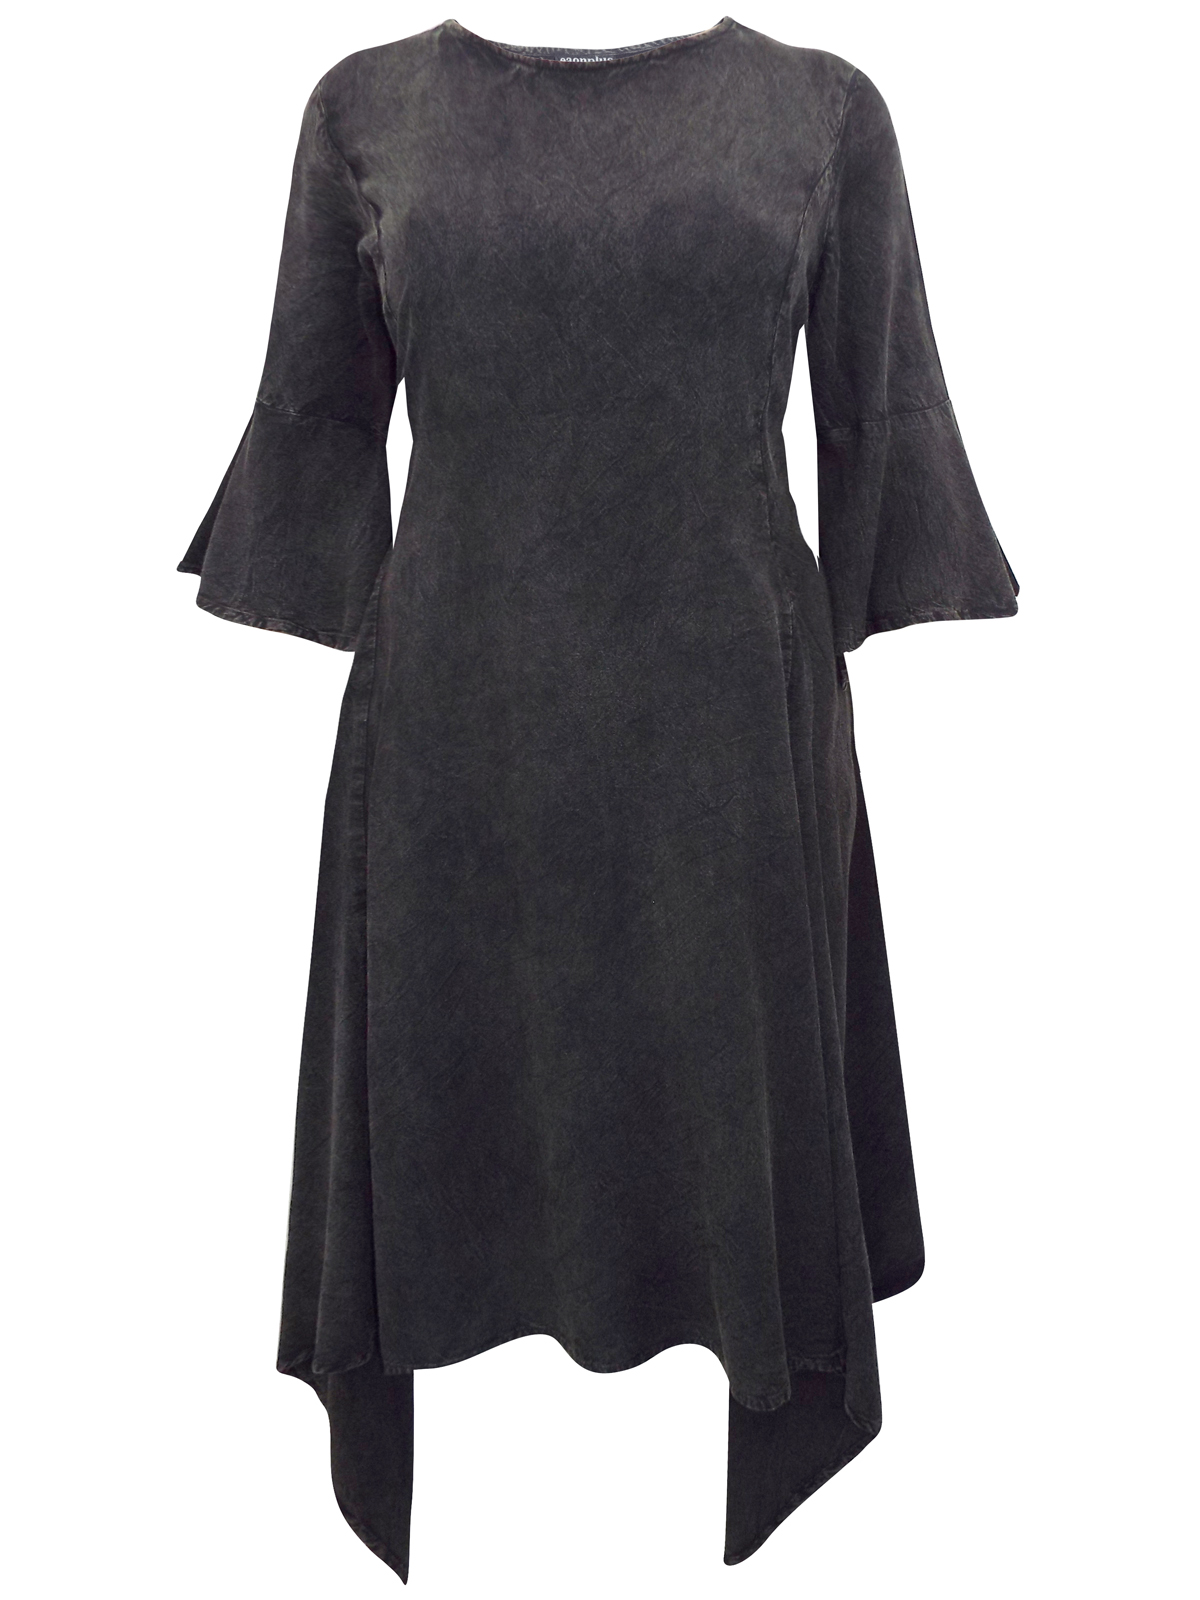 black dress size 26